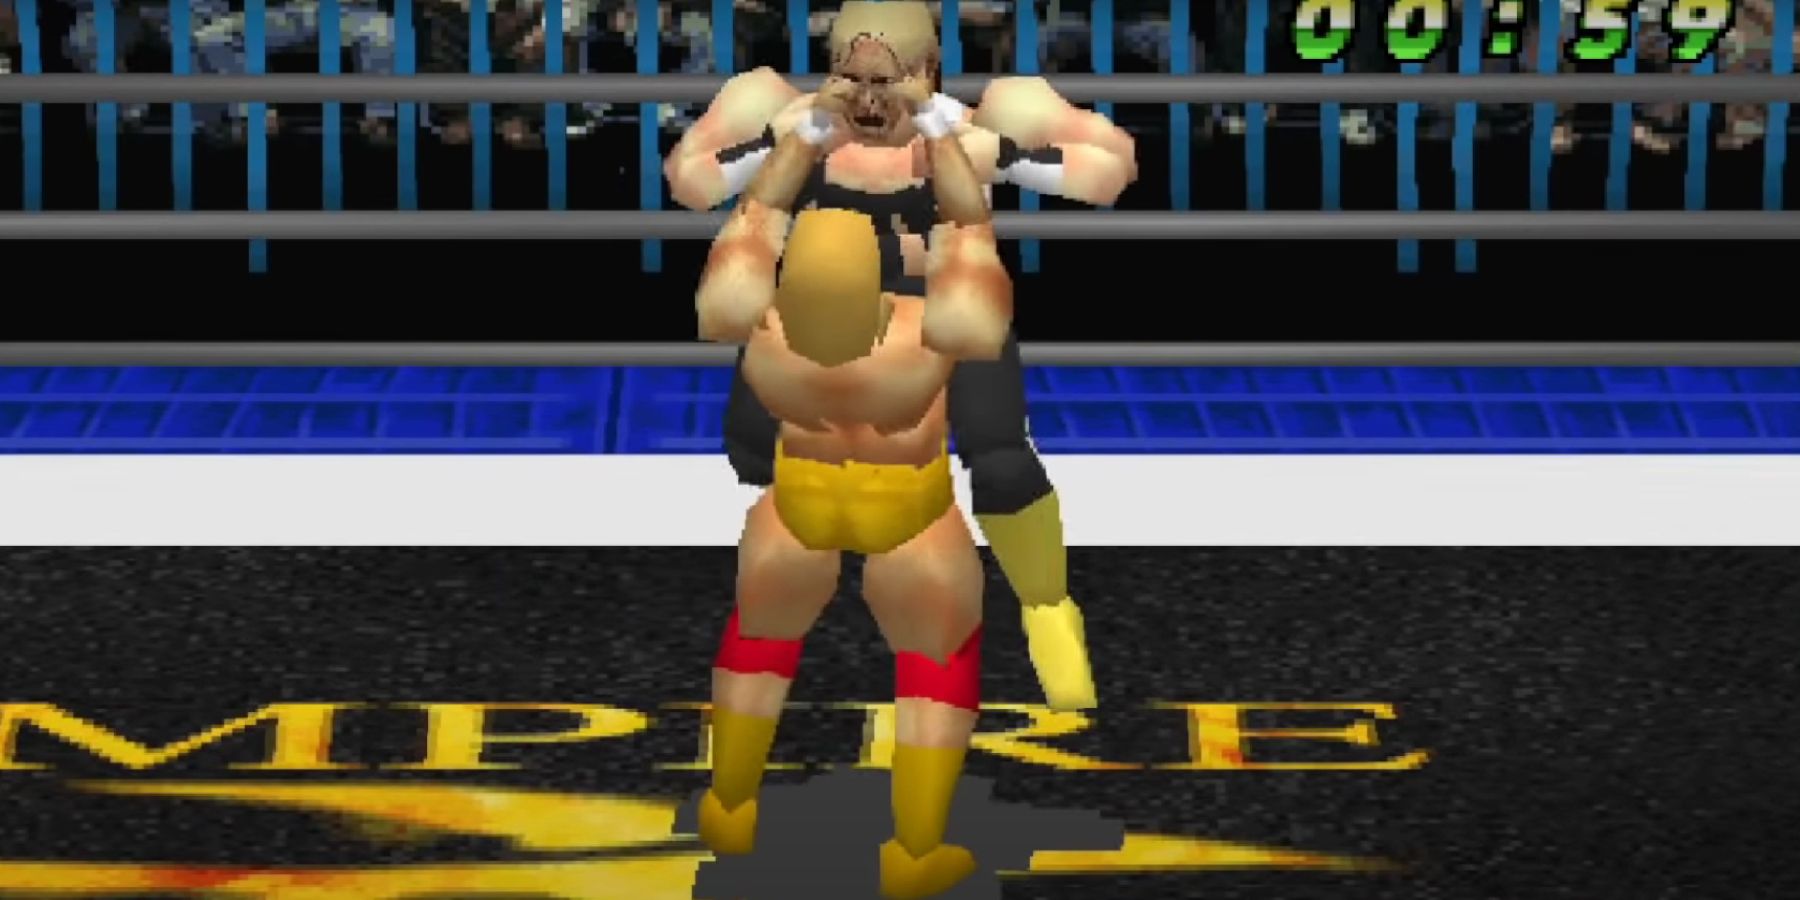 WCW vs The World - Hulk with the lifting choke hold